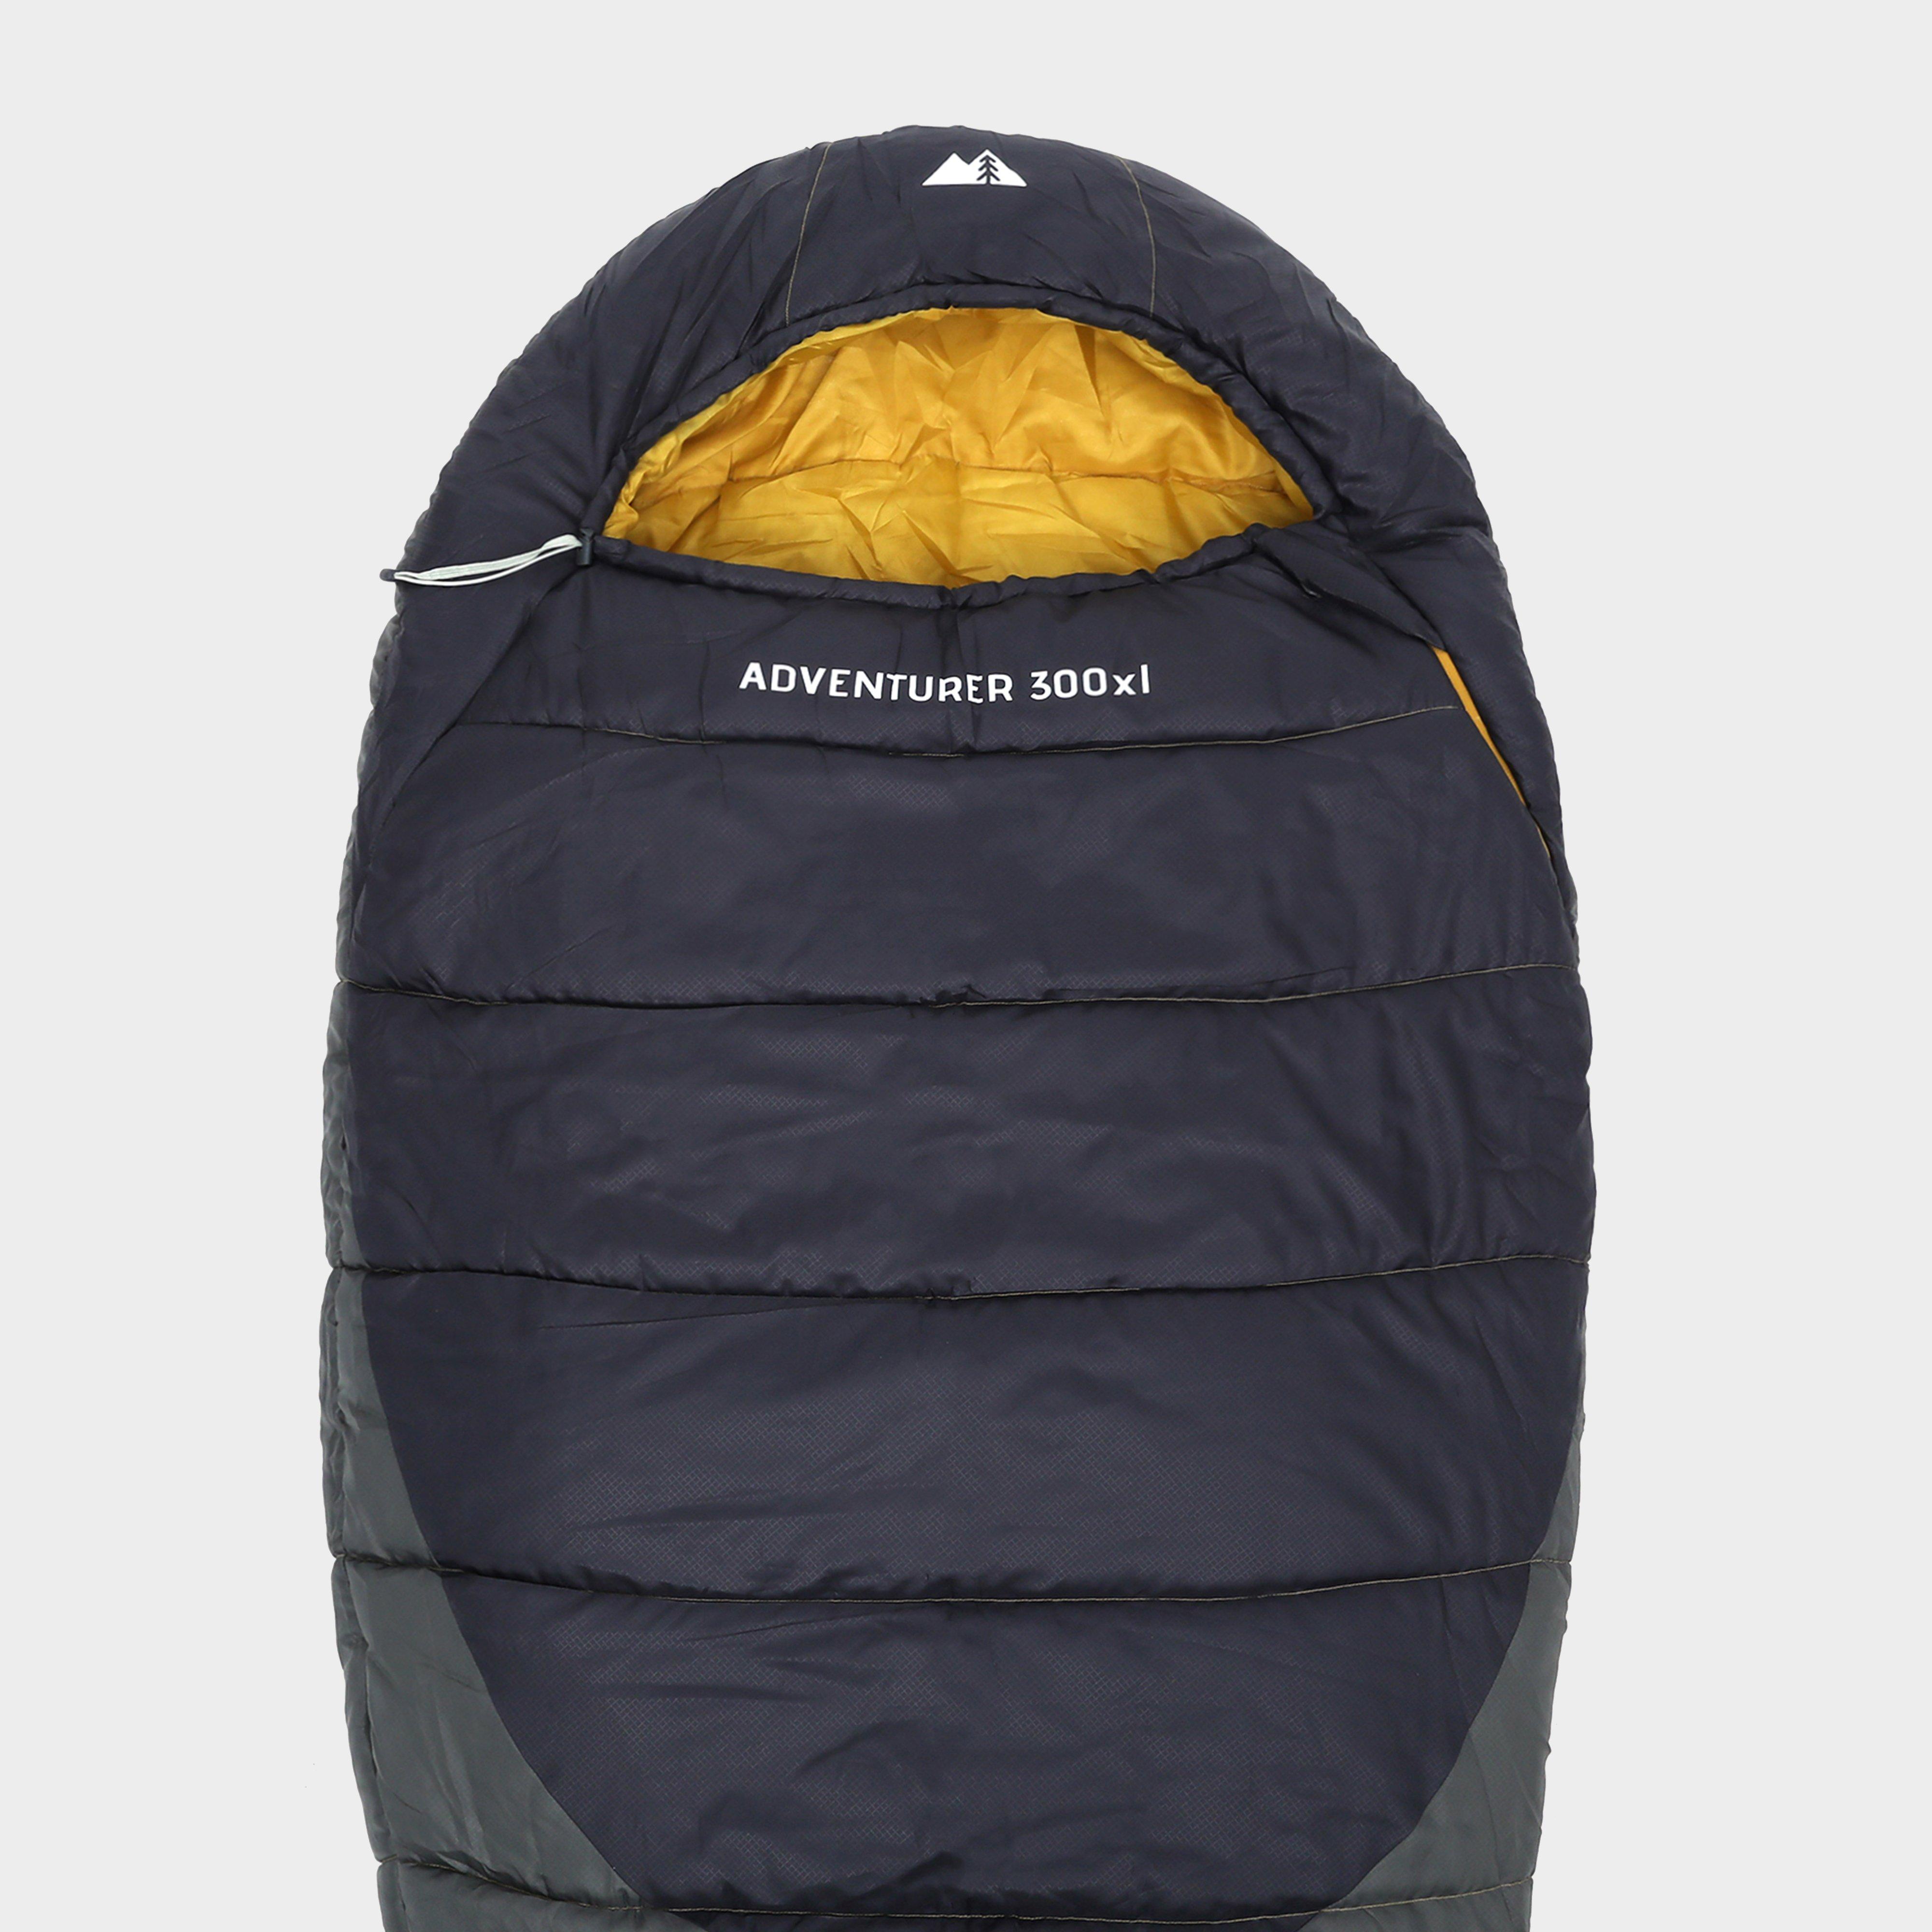  Eurohike Adventurer 300 XL Sleeping Bag, Grey